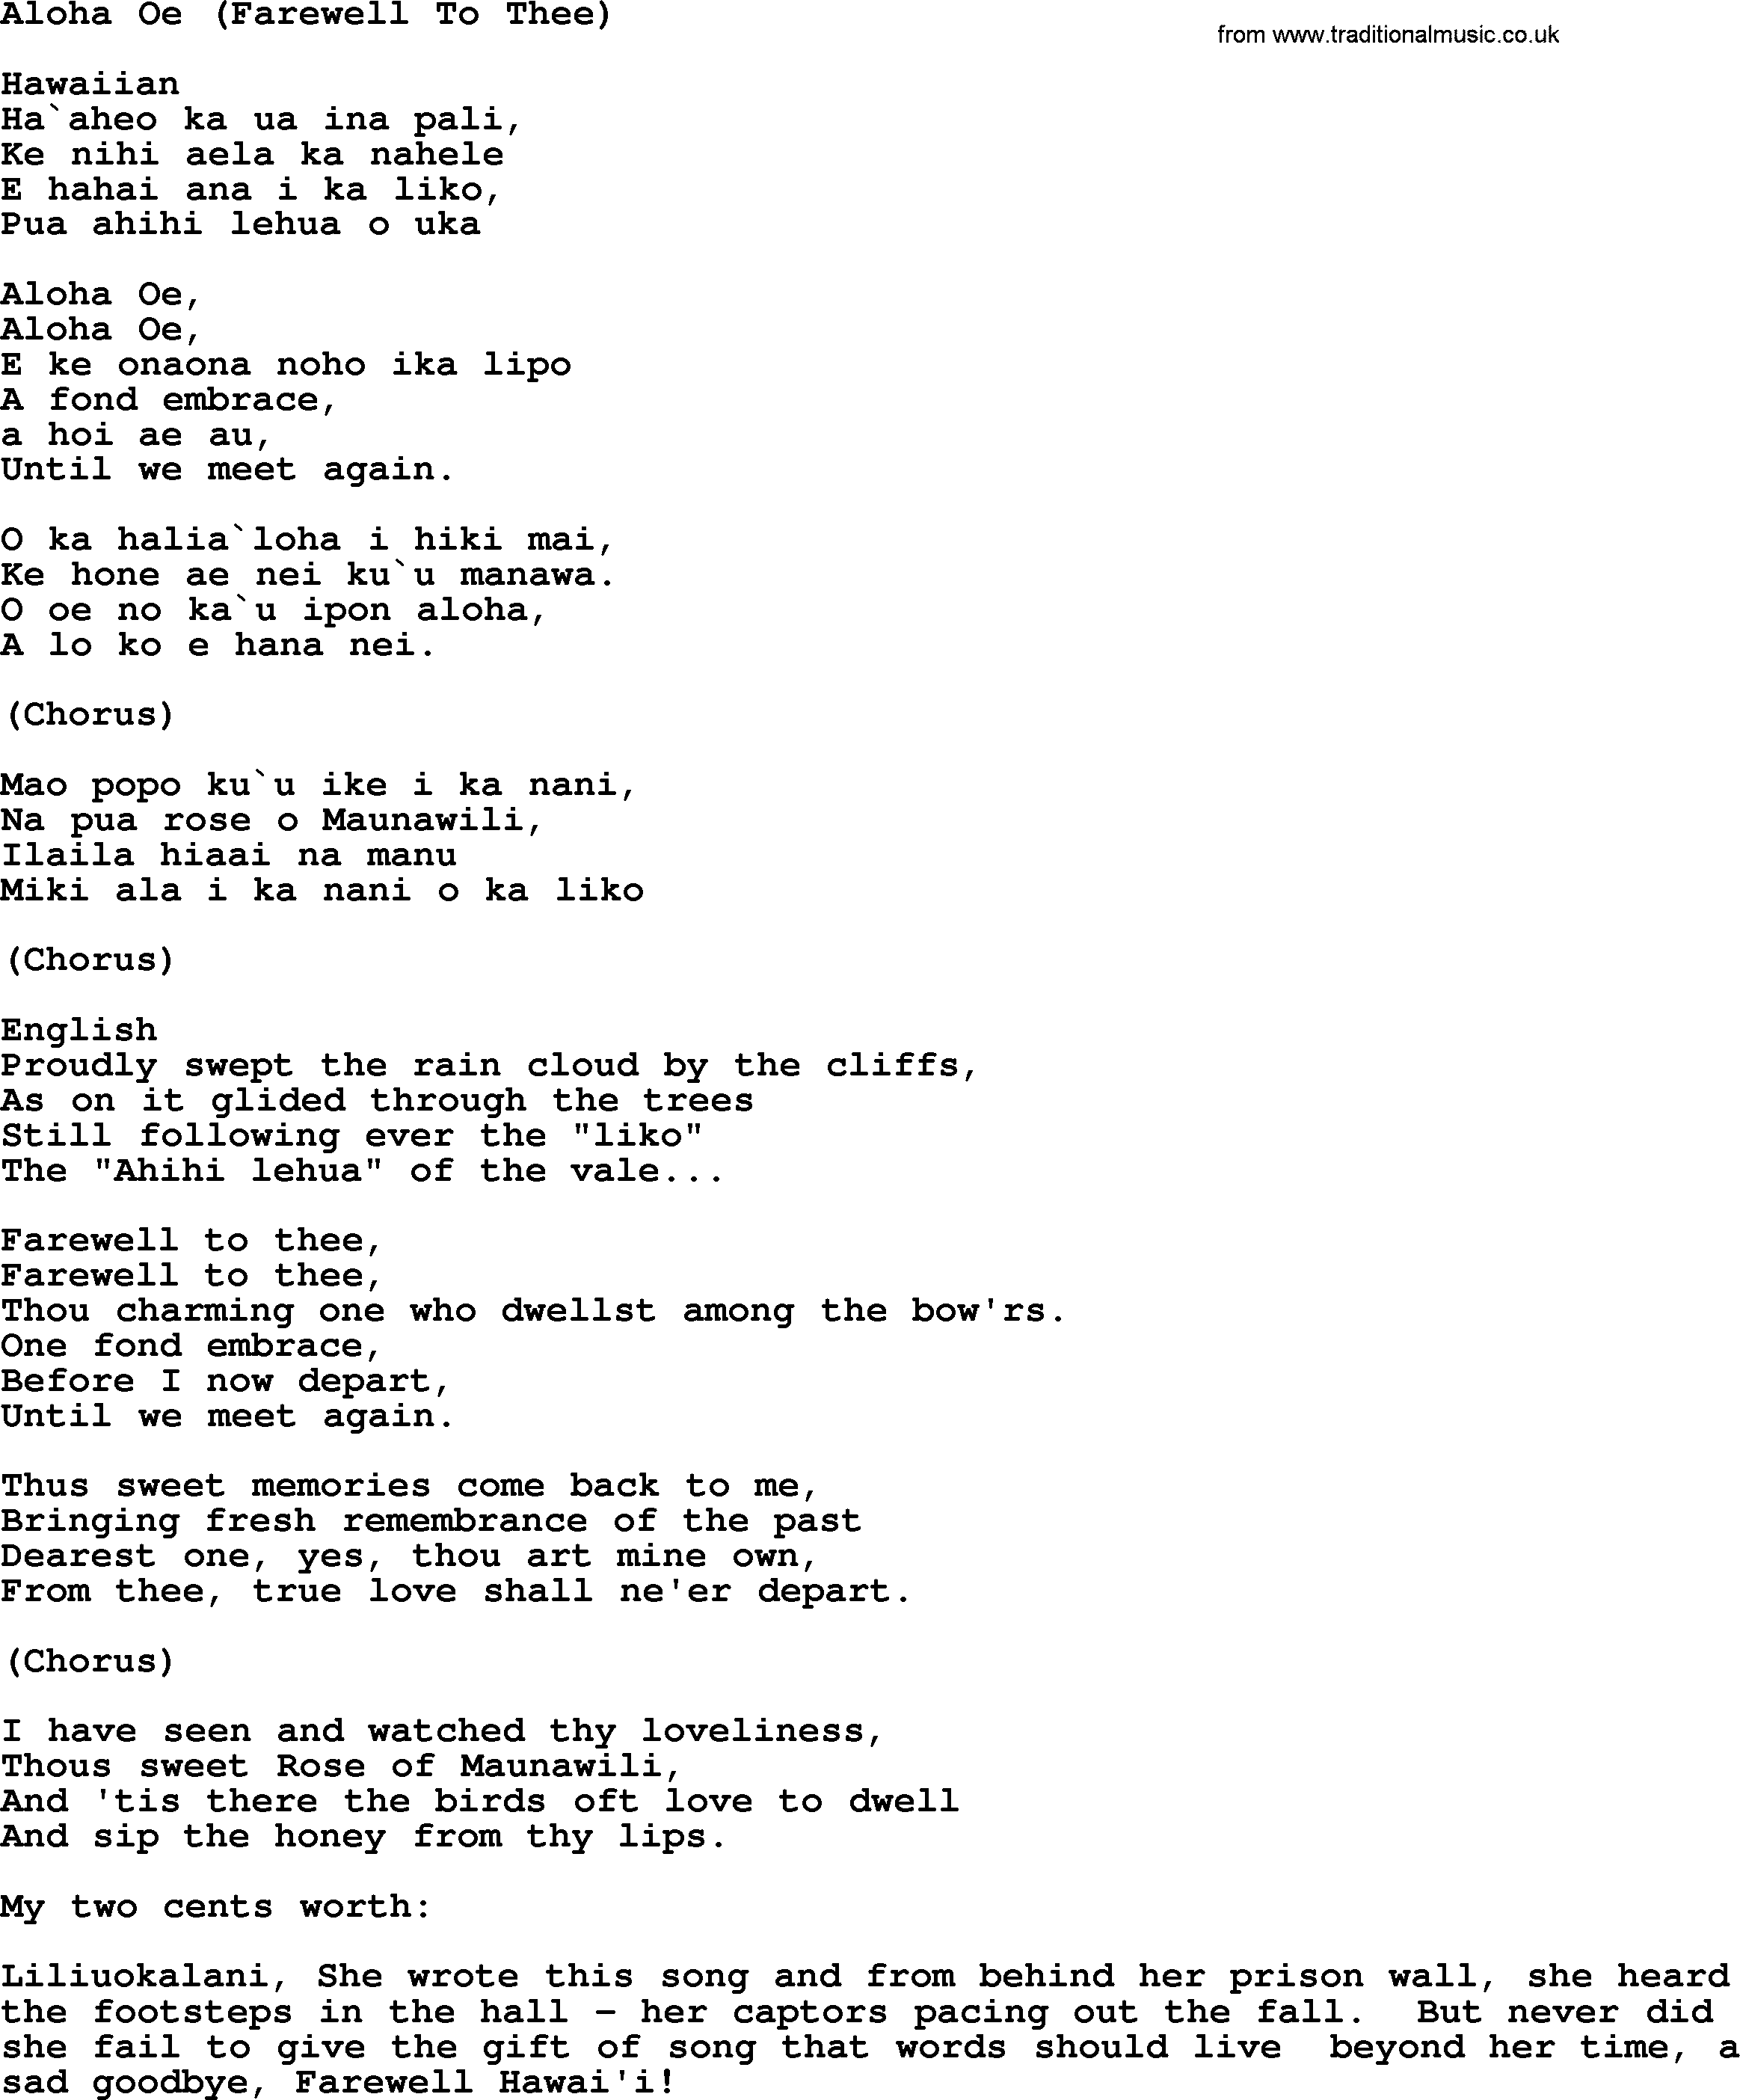 Marty Robbins song: Aloha Oe Farewell To Thee, lyrics